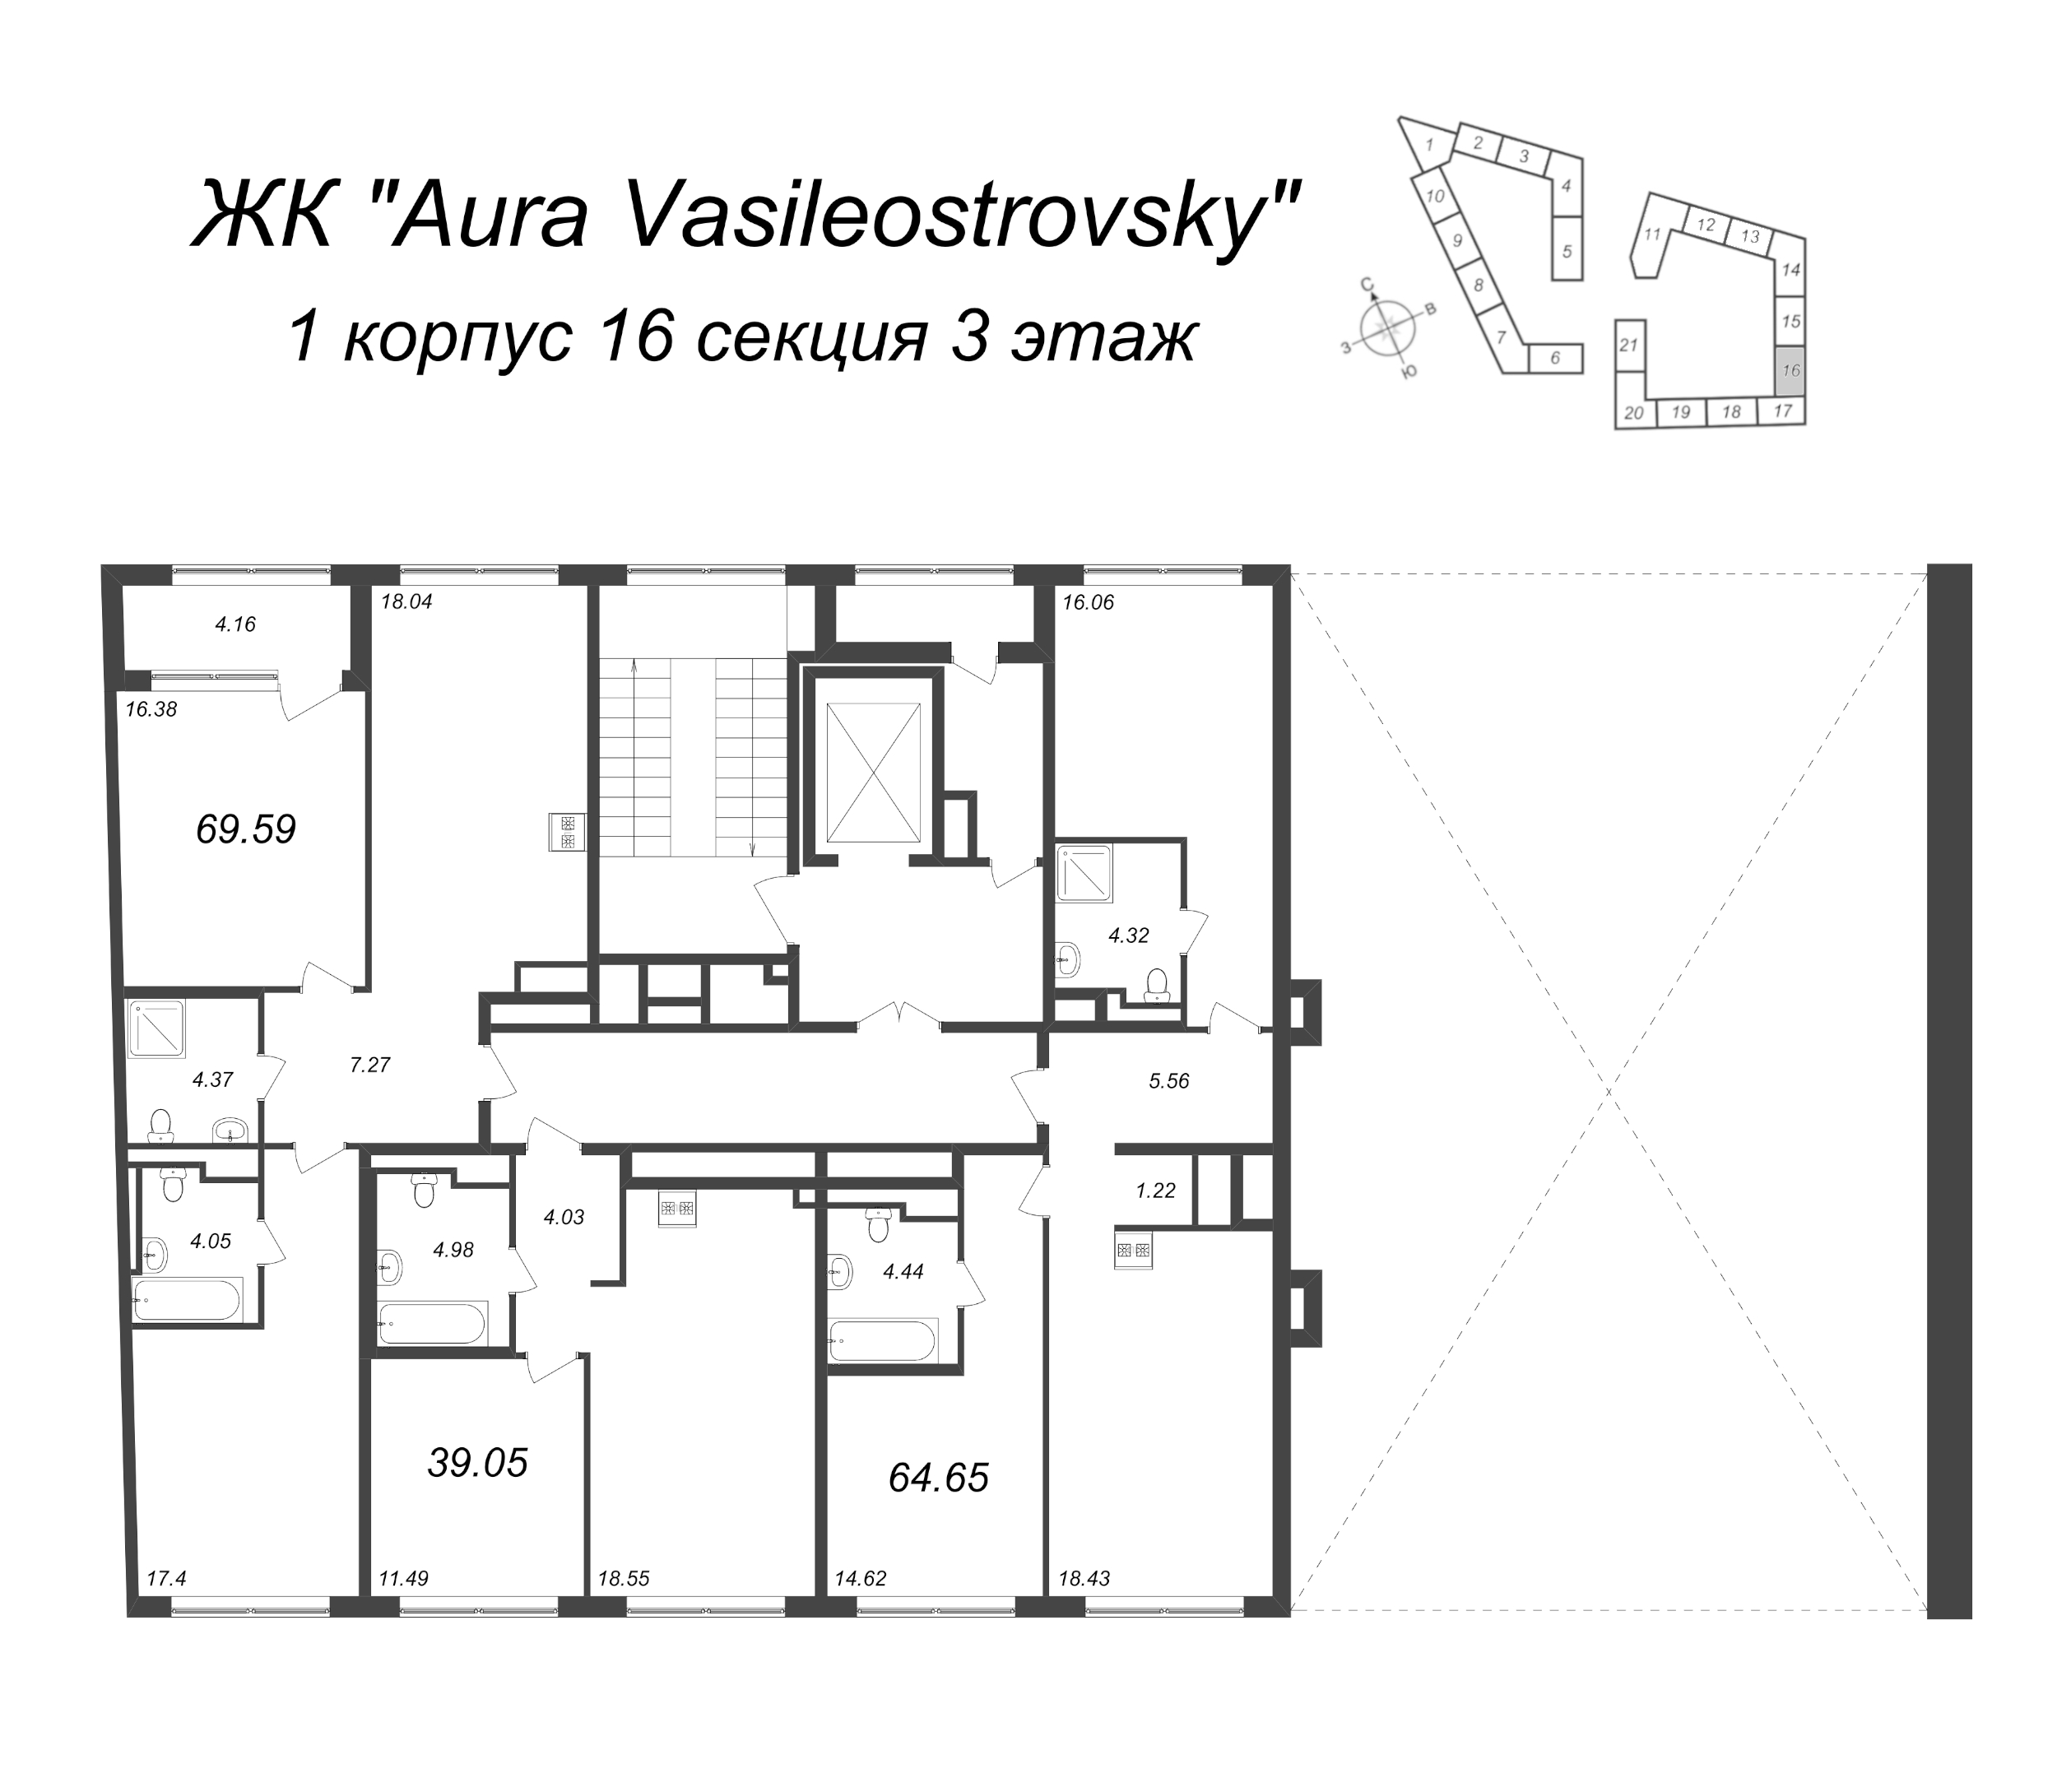 3-комнатная (Евро) квартира, 64.65 м² - планировка этажа